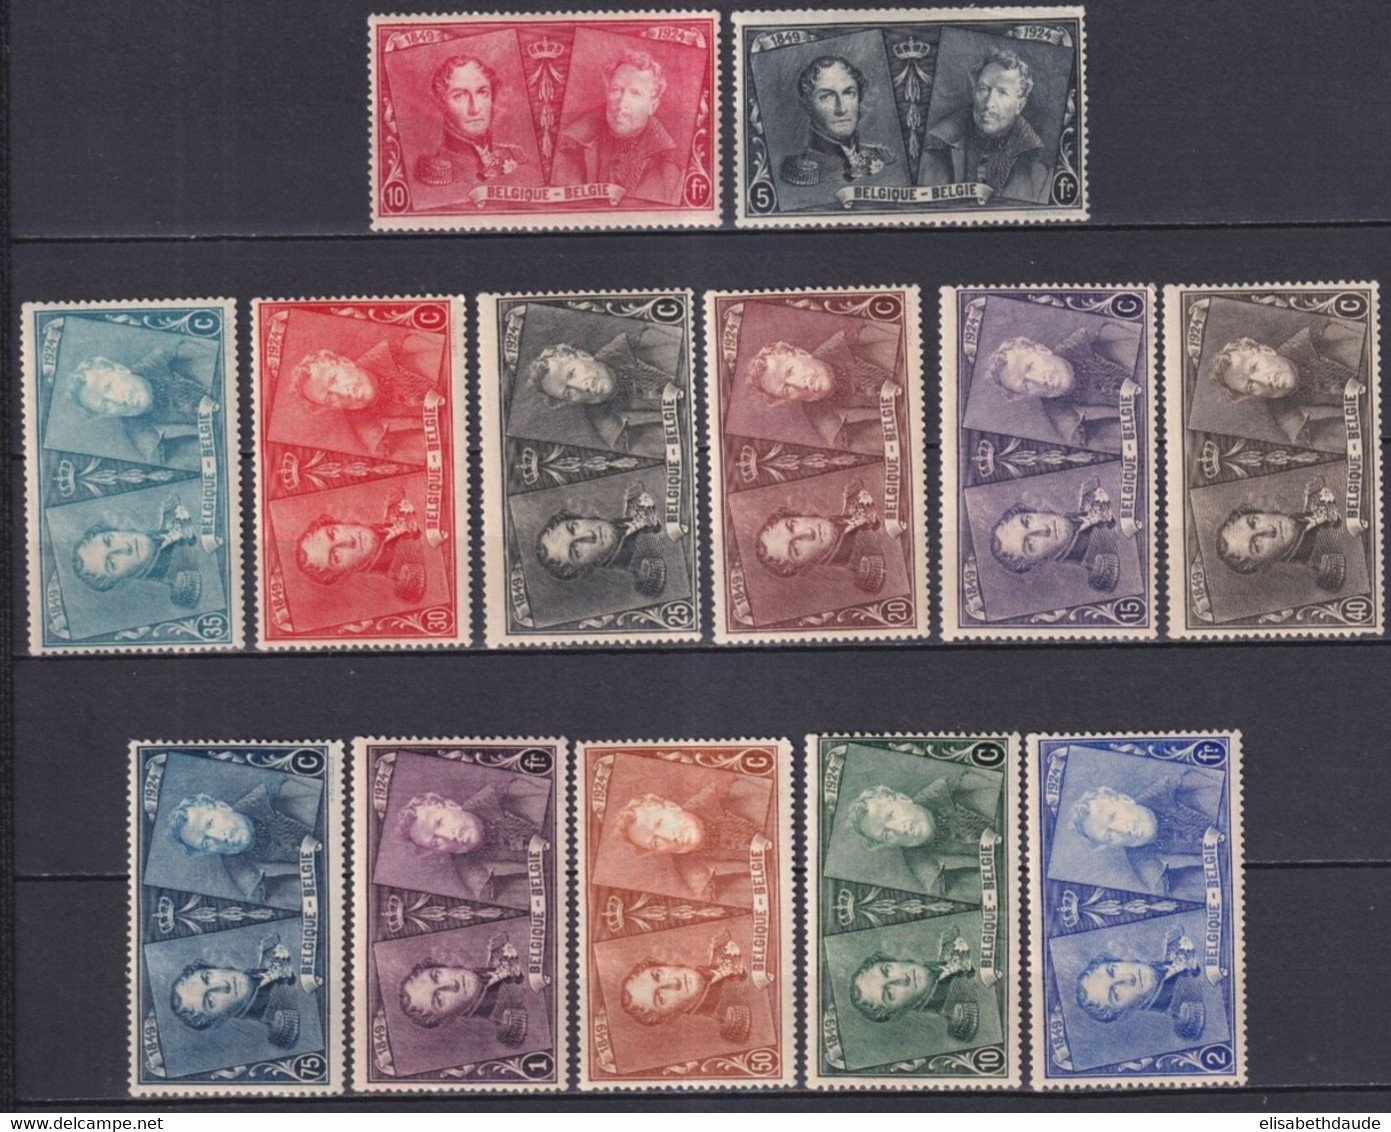 BELGIQUE - 1925 - 75 ANS DU TIMBRE - SERIE COMPLETE YVERT N°221/233 * MLH (CHARNIERE PEU VISIBLE) - COTE = 67.5 EUR. - Unused Stamps